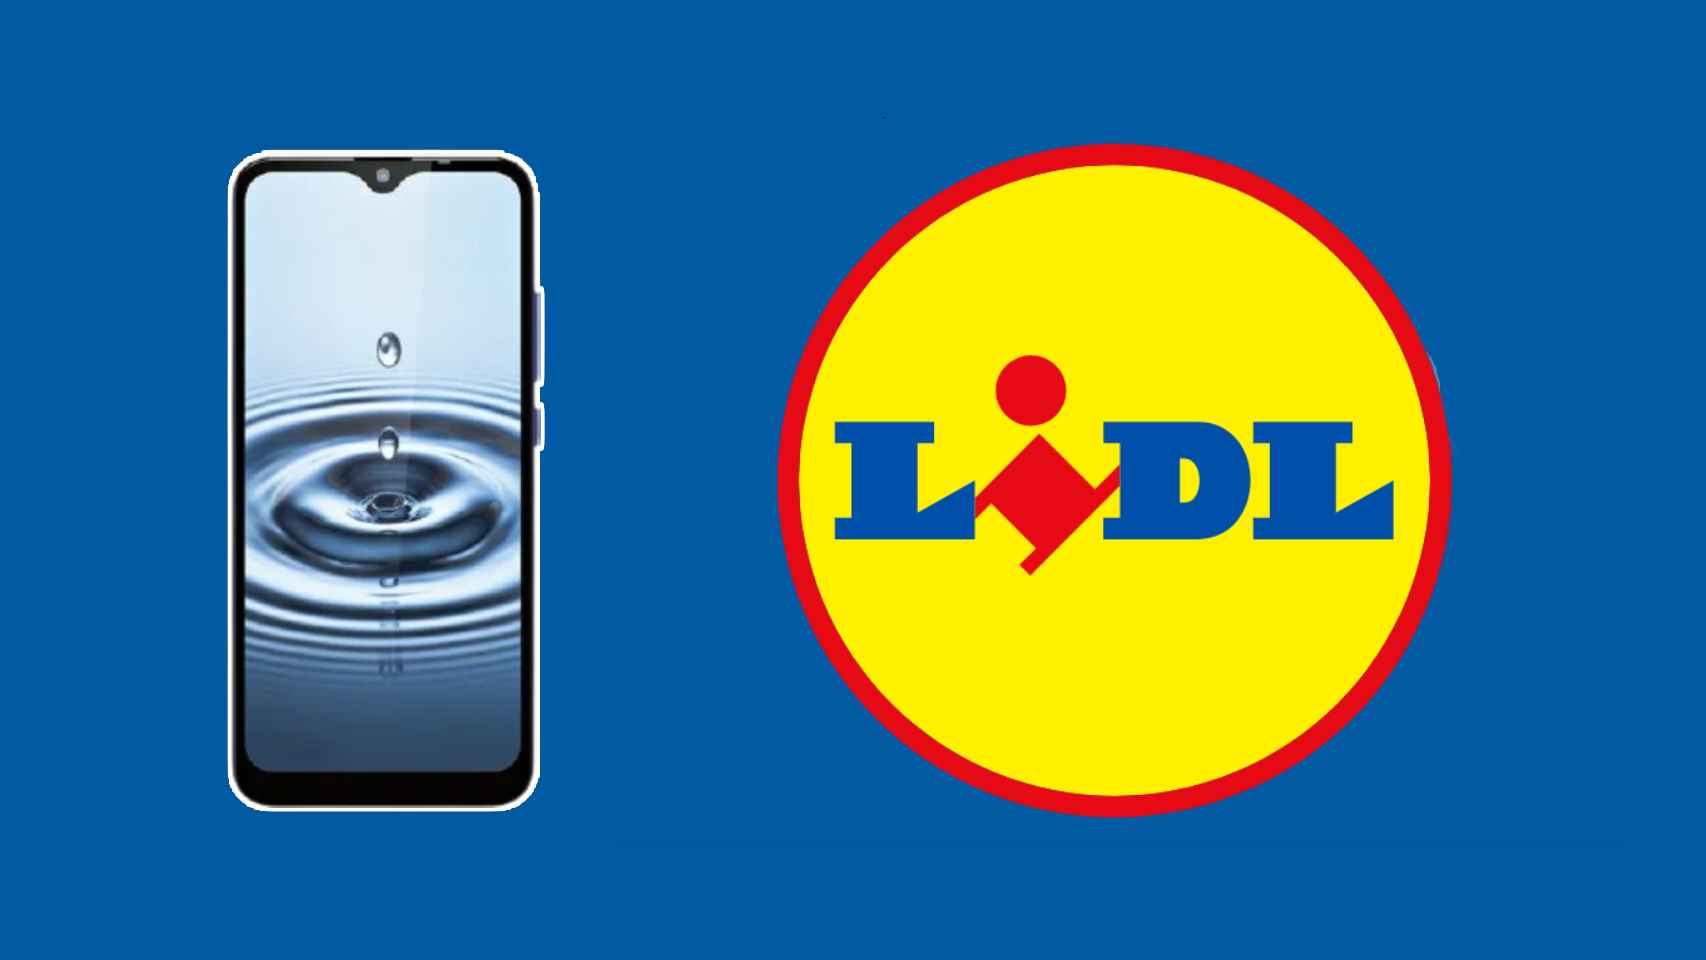 Lidl tiene en oferta un teléfono móvil por 70 euros.